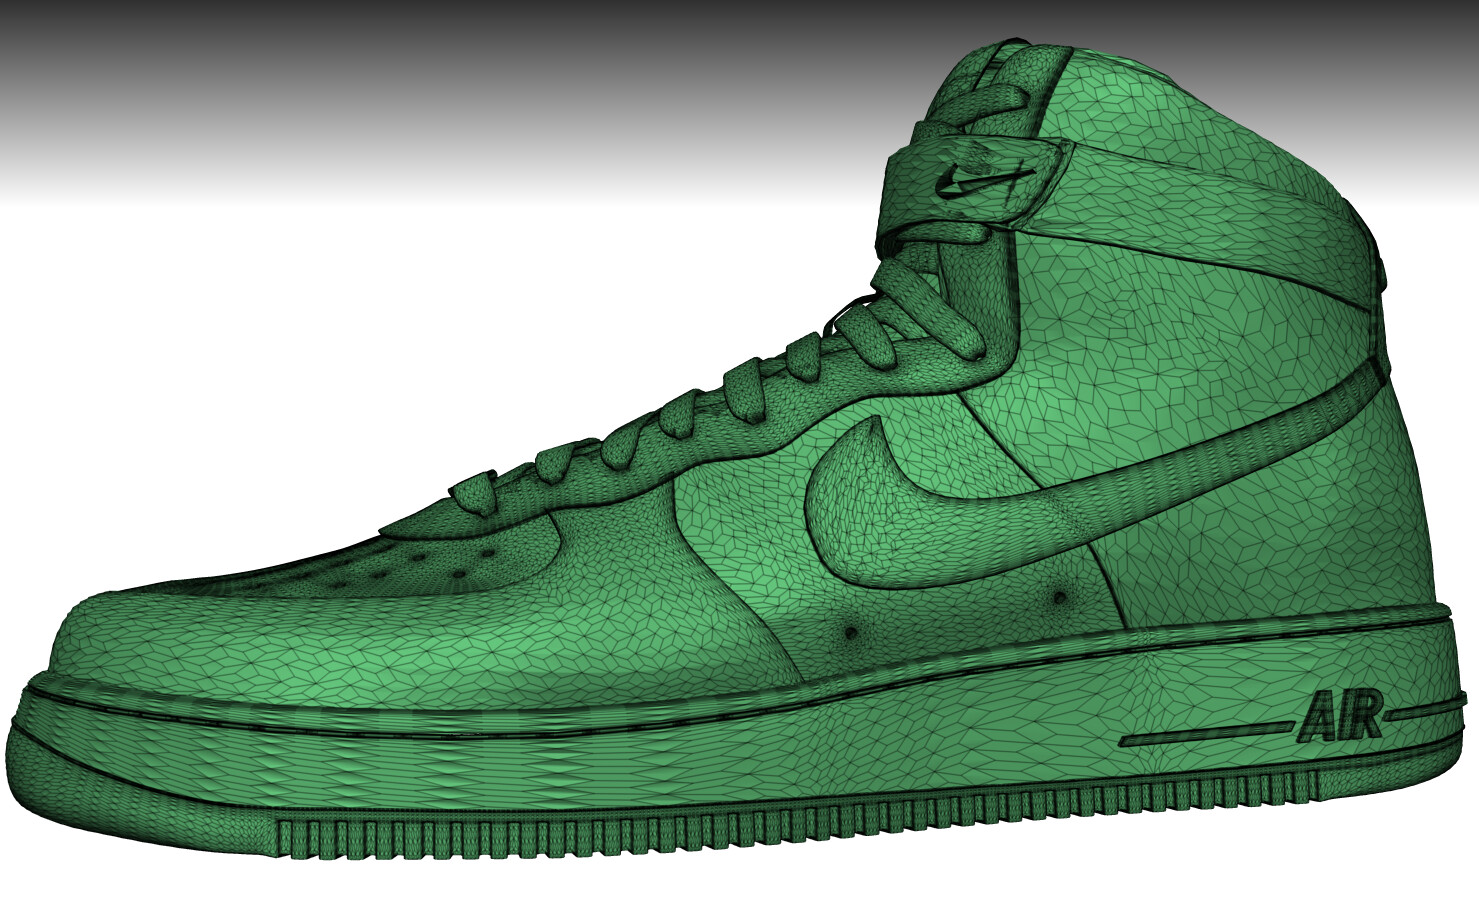 Nike Air Force 1 PSD Shoe Template